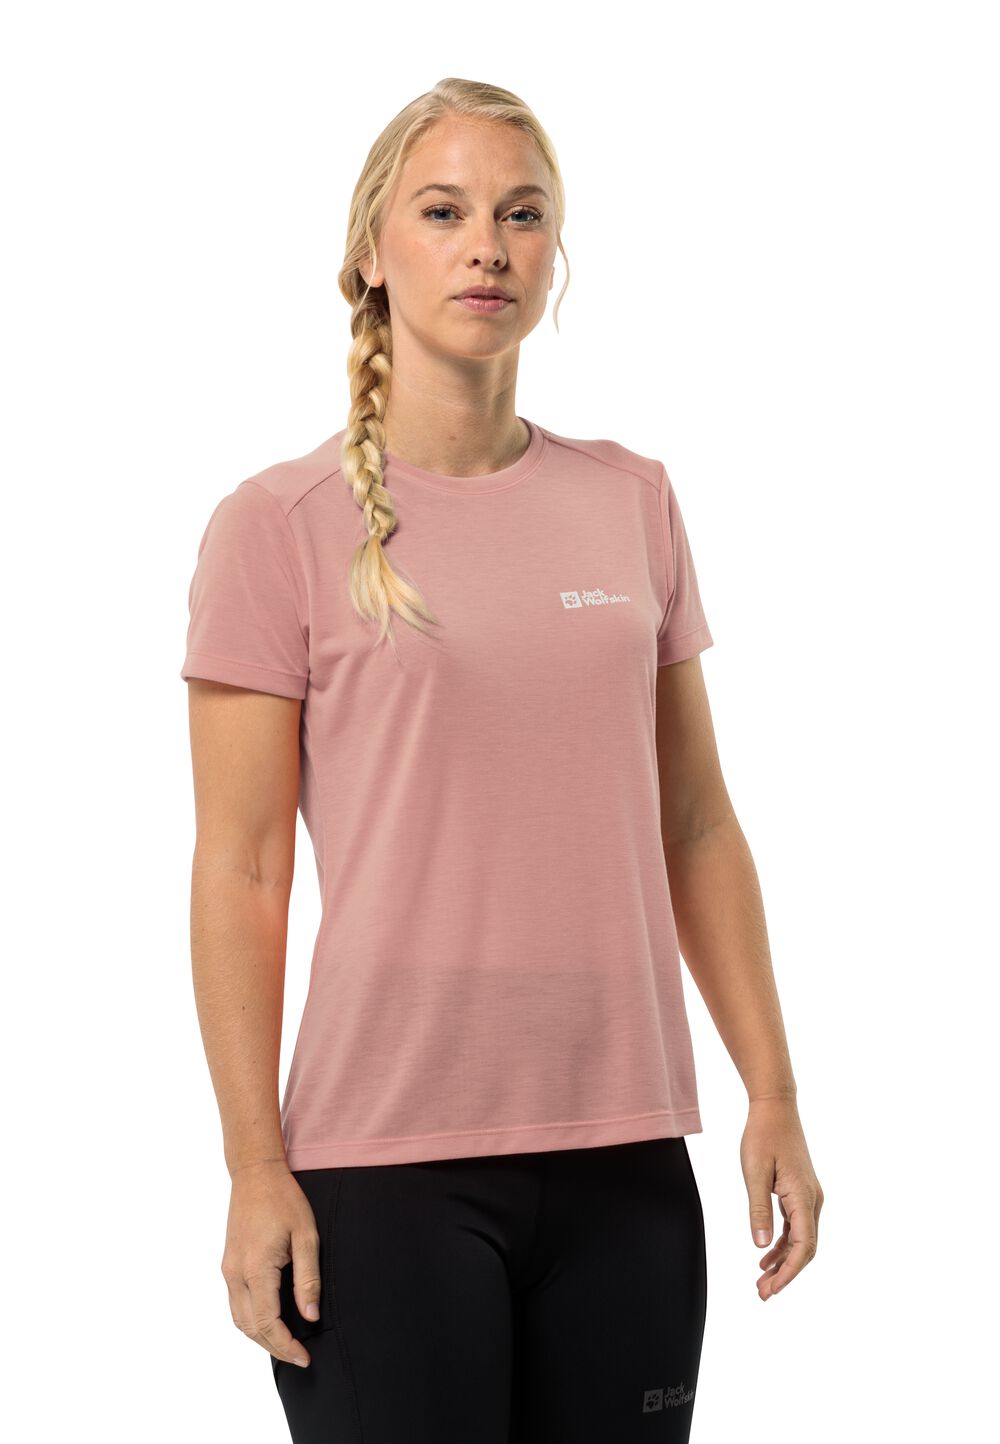 Jack Wolfskin Vonnan S S T-Shirt Women Functioneel shirt Dames XL bruin rose dawn